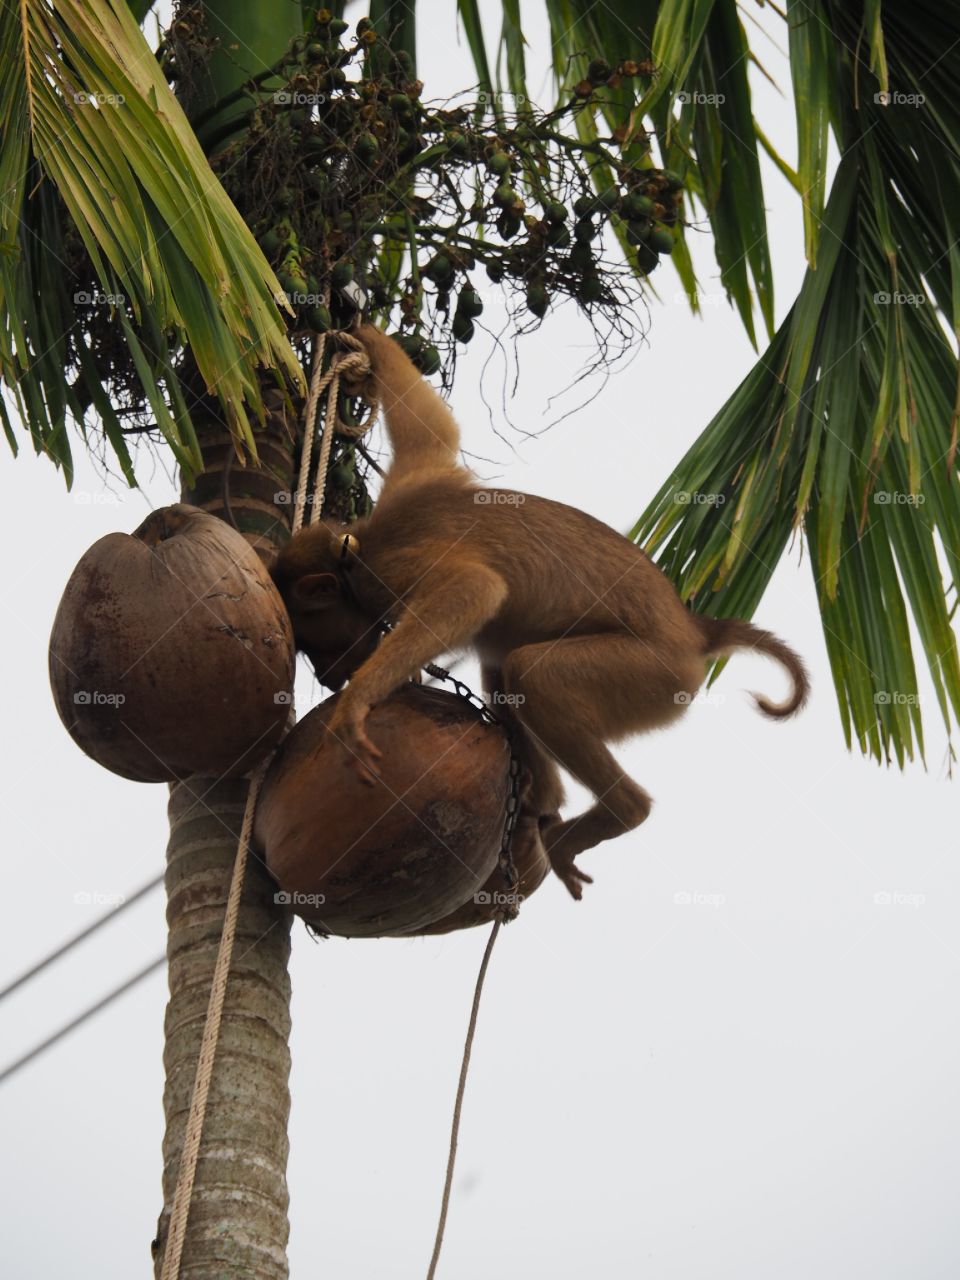 Training a monkey to work